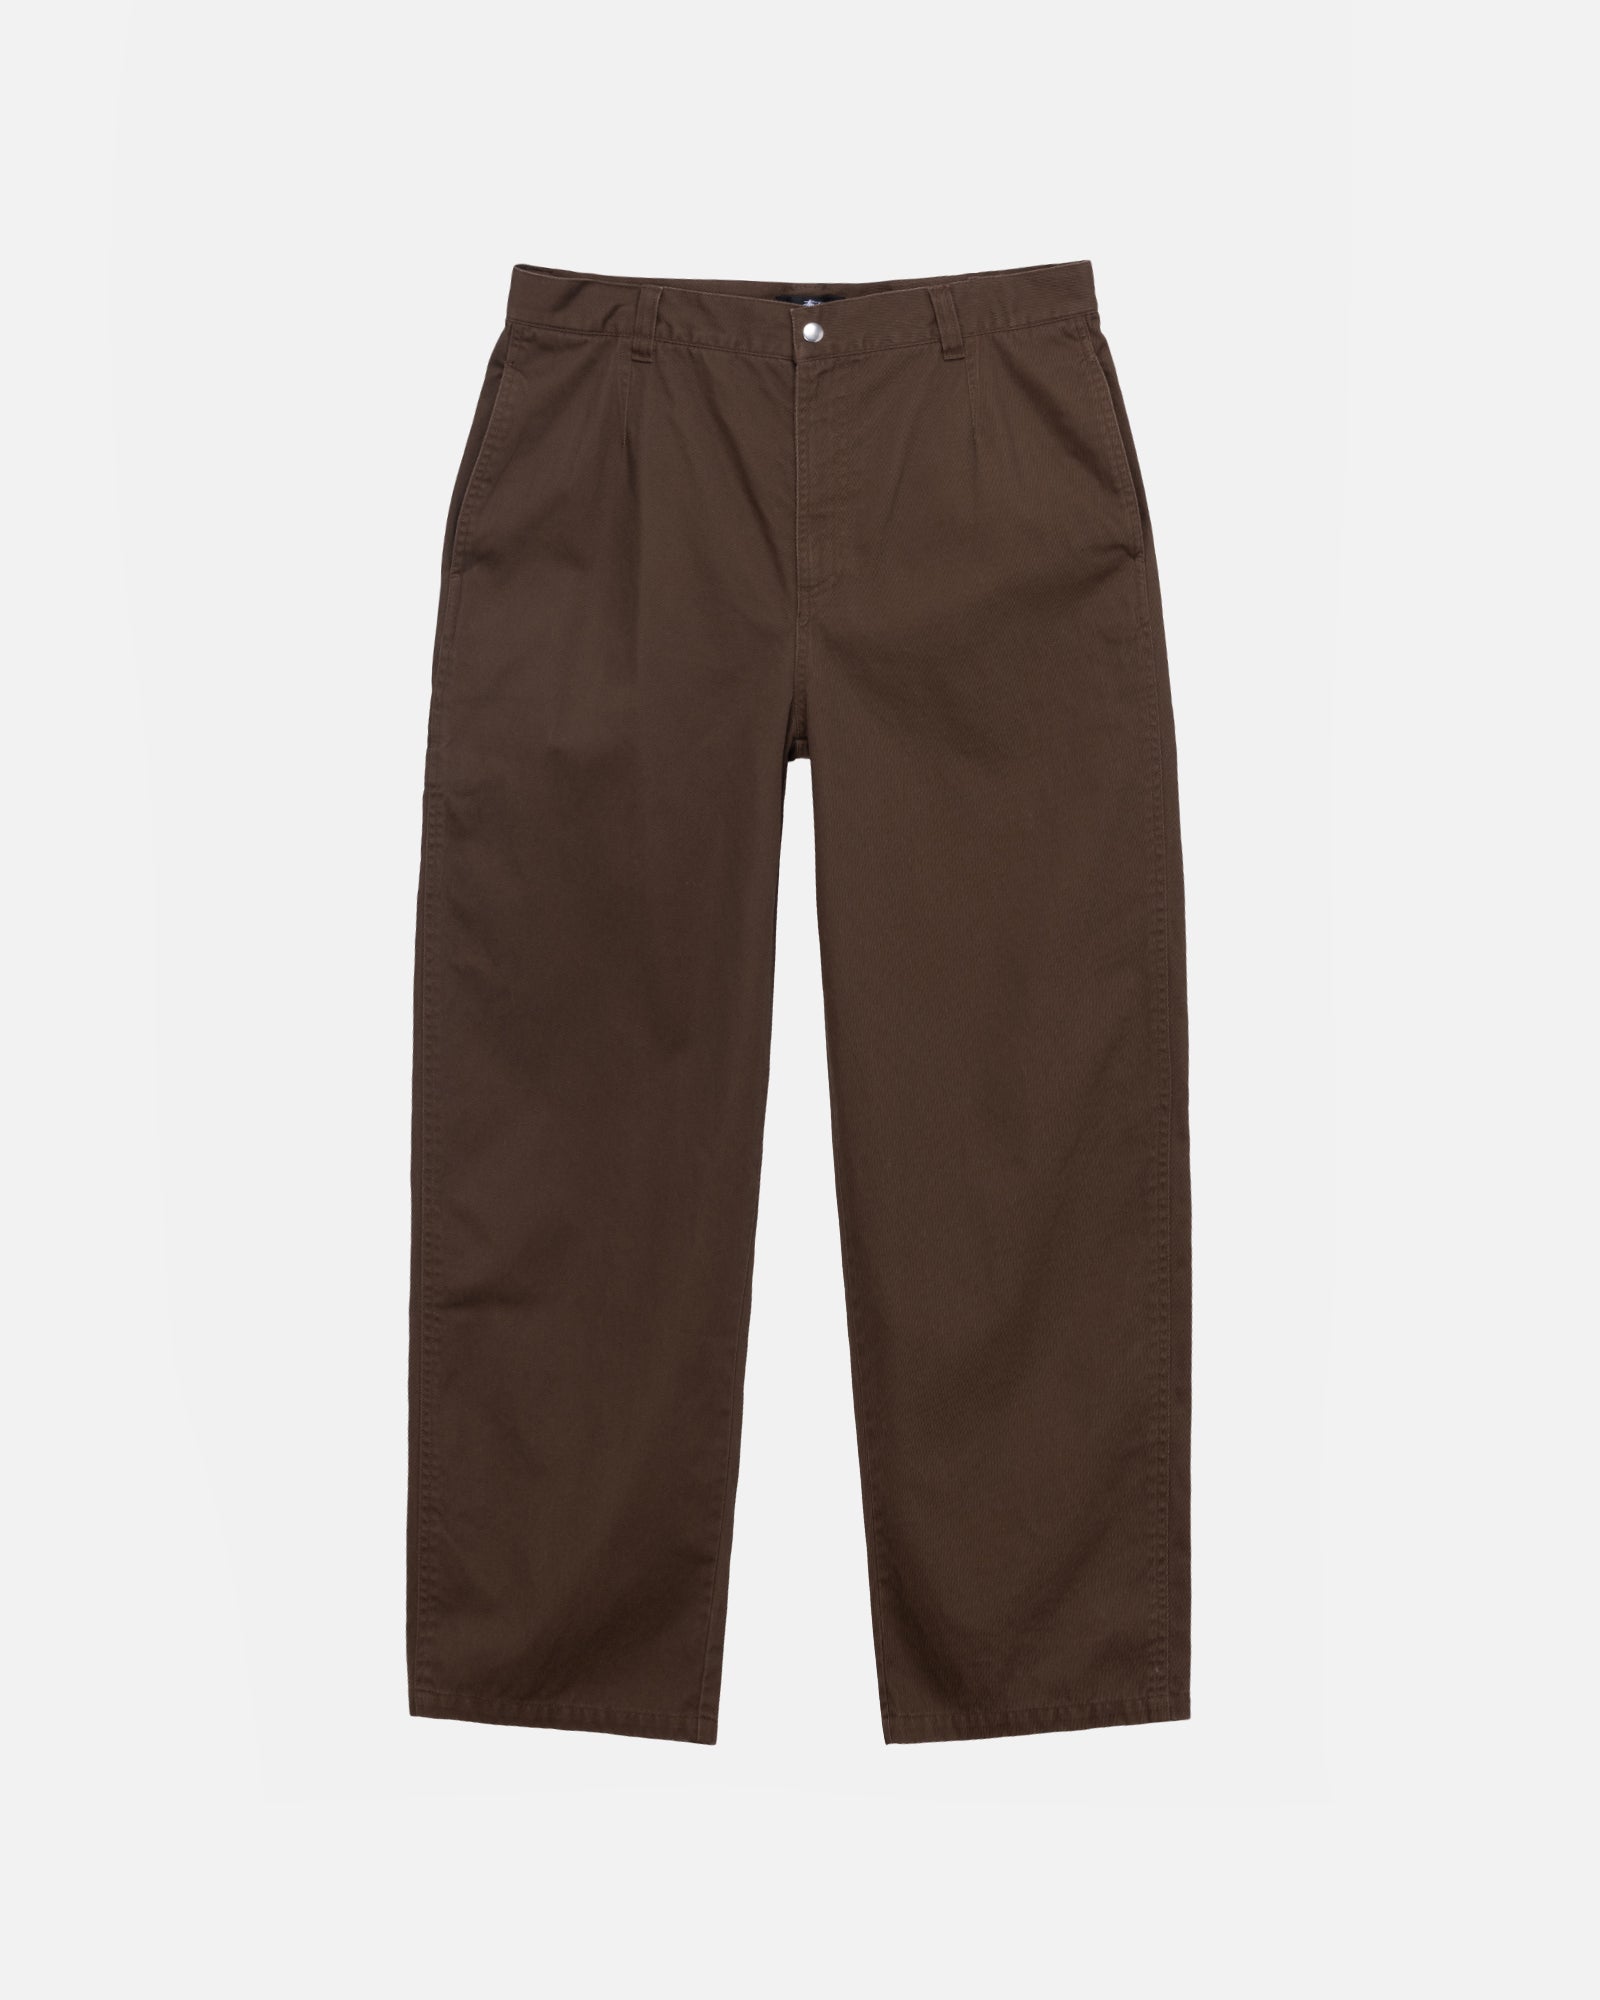 Pants: Work Pants, Cargo Pants & Jeans by Stussy – Stüssy